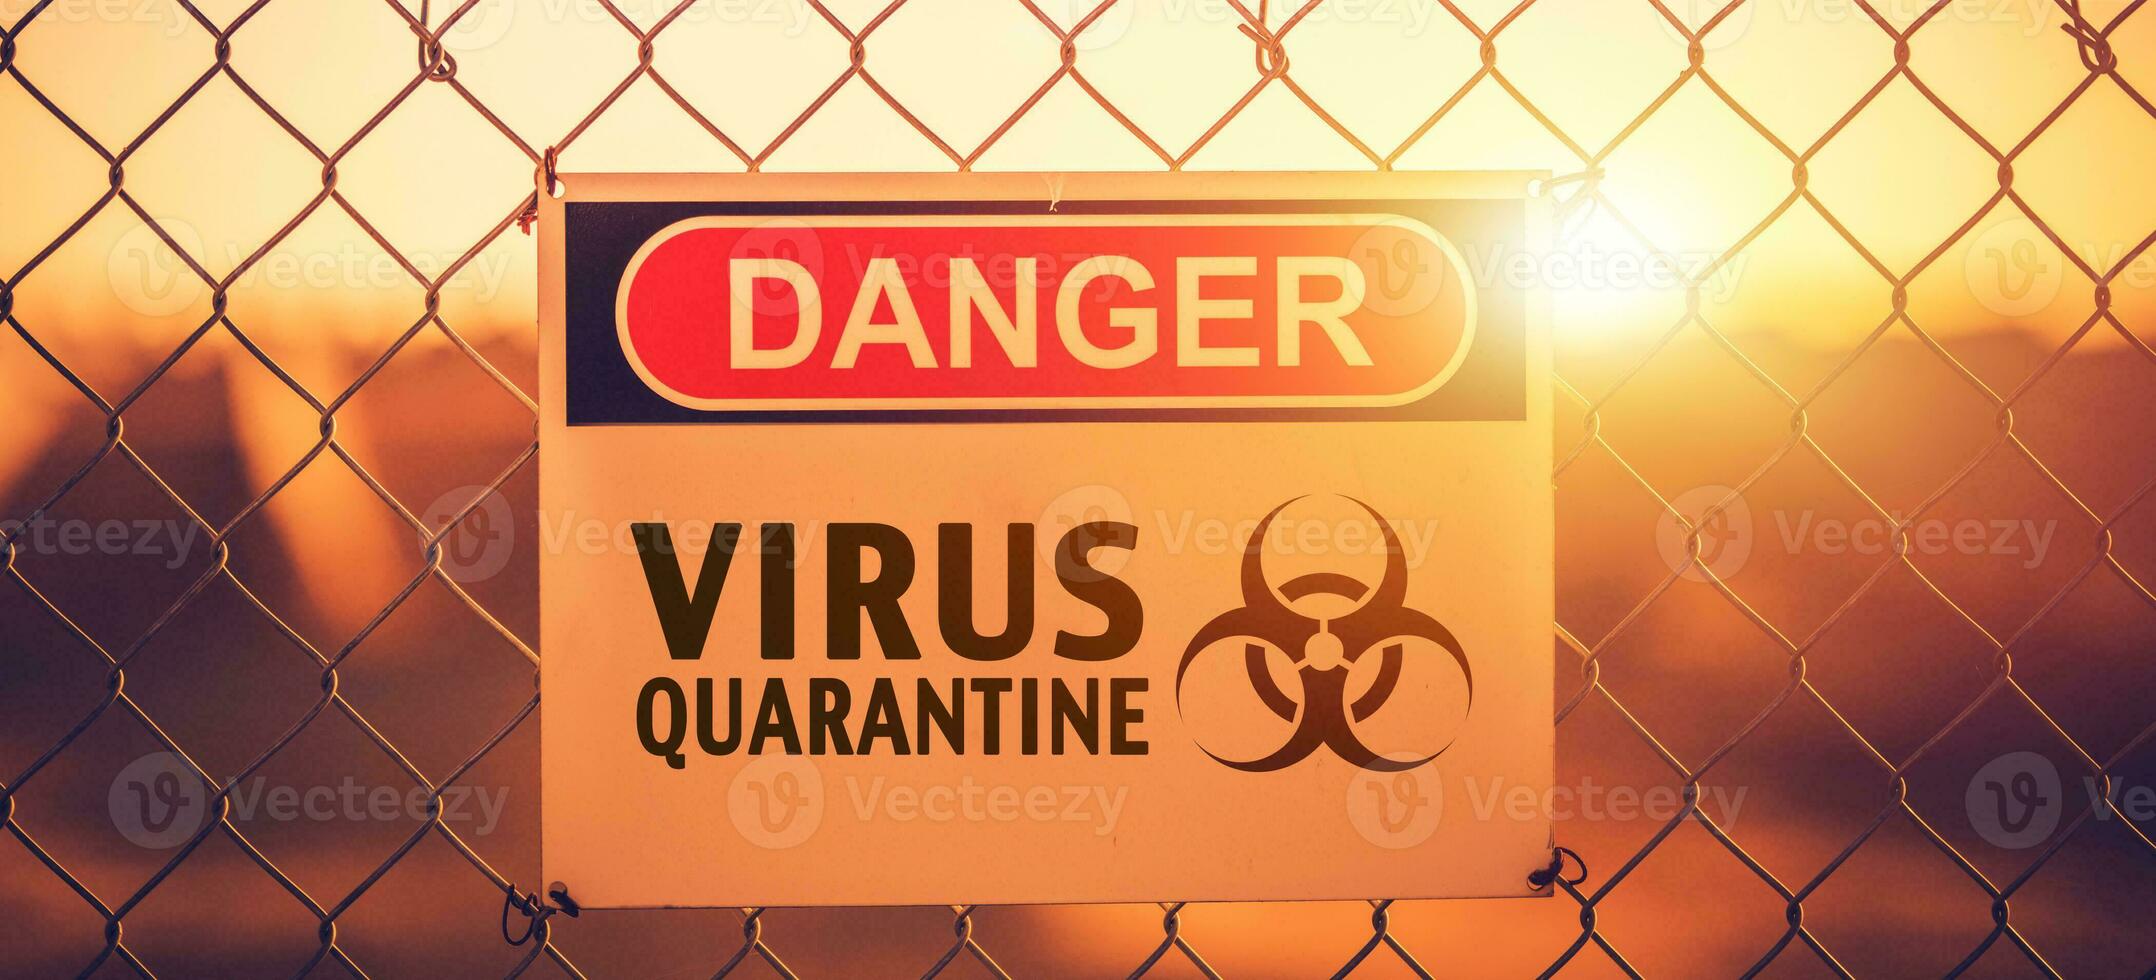 peligro zona. virus cuarentena zona advertencia firmar en un fantasia foto